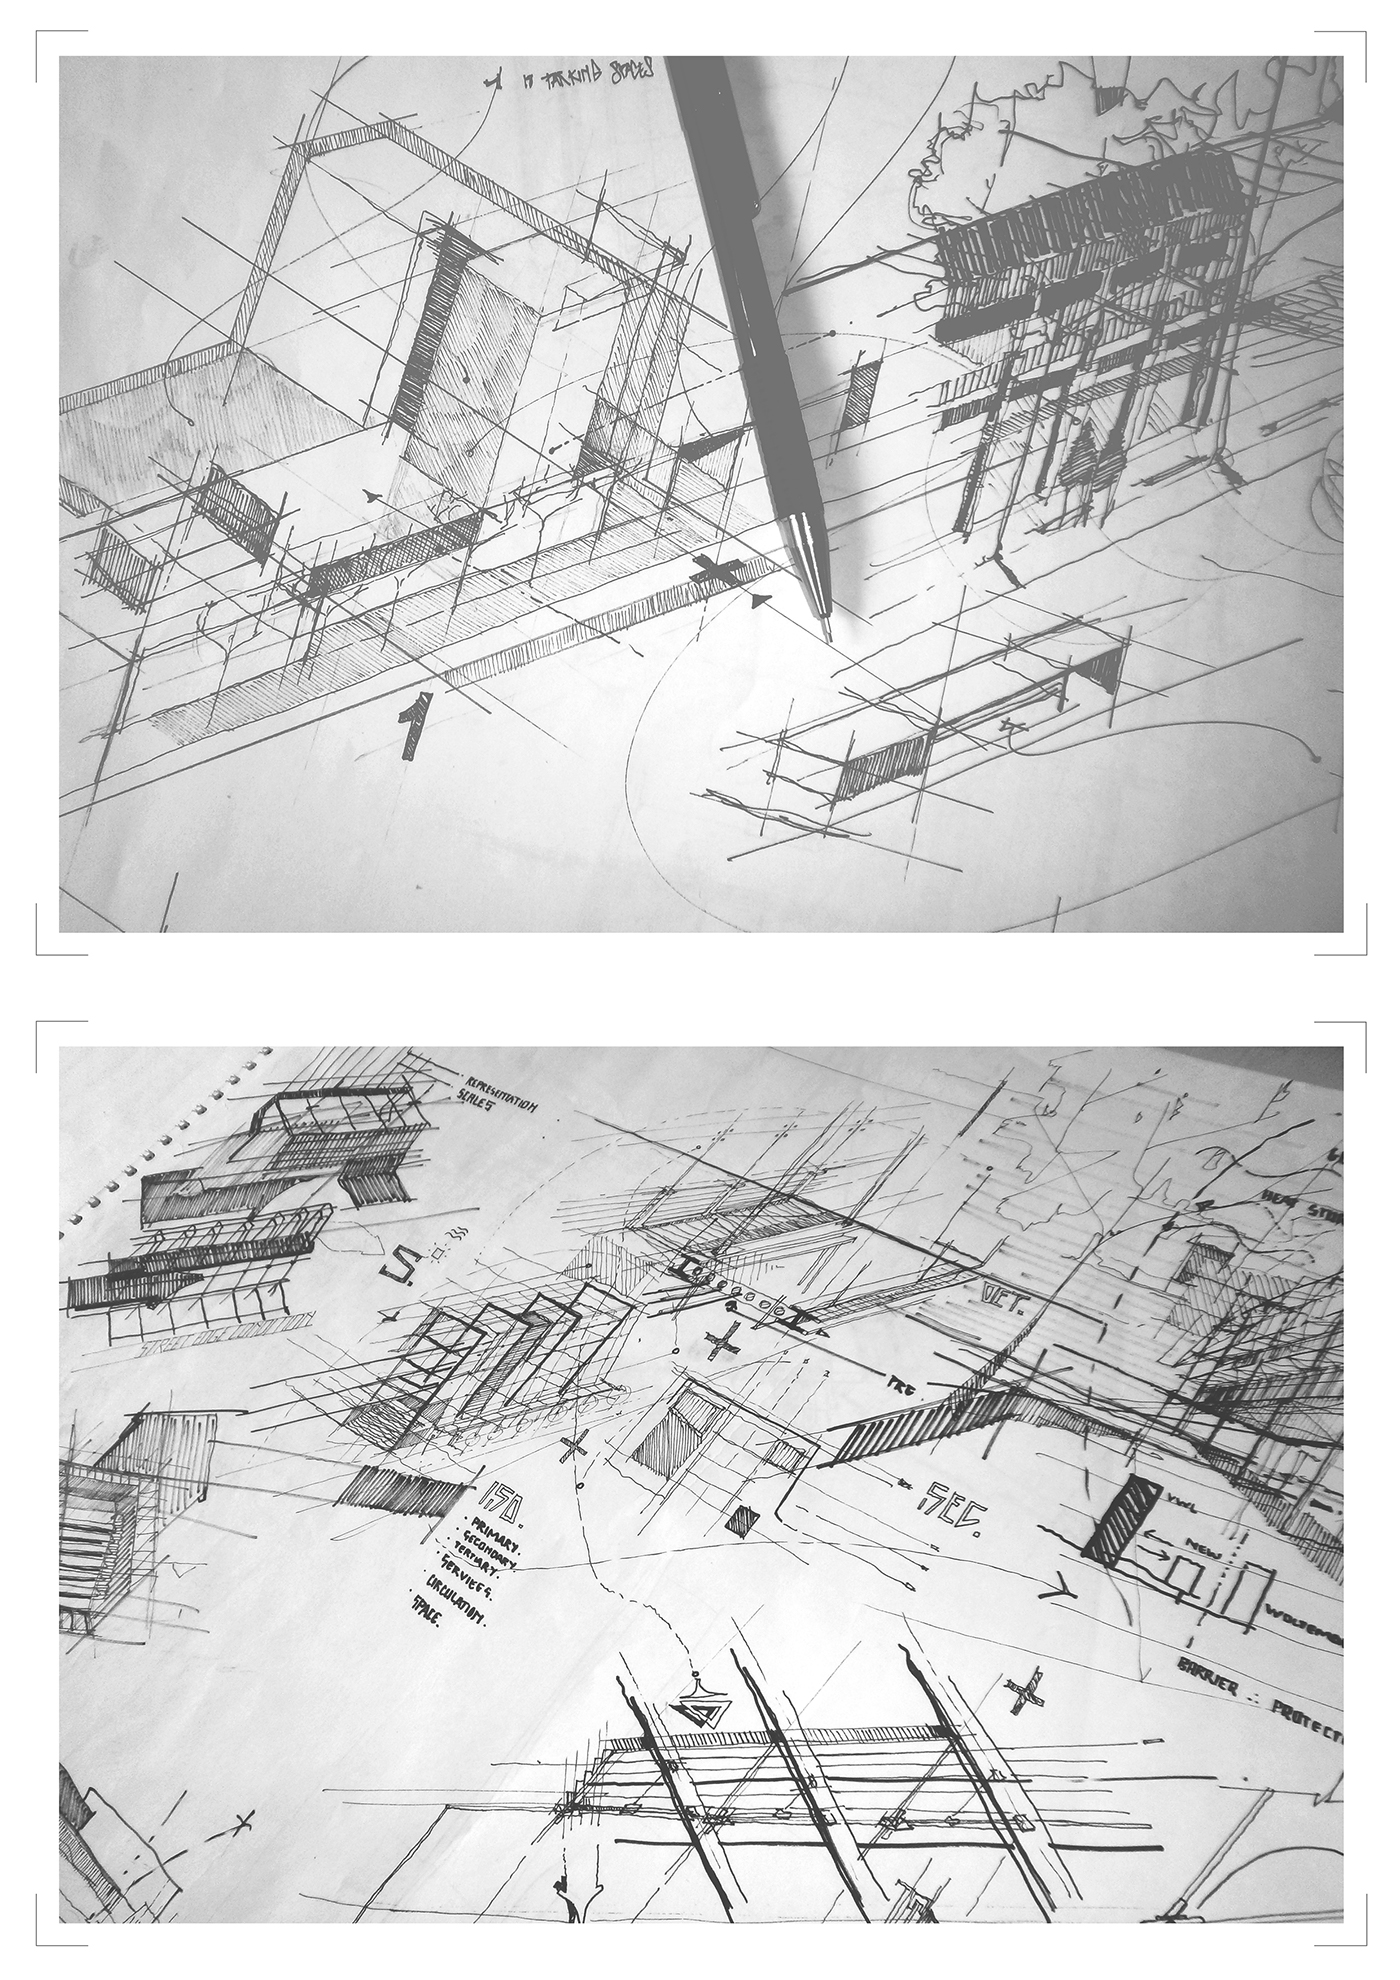 Urban Design thesis Dissertation student pretoria Vanguard art culture